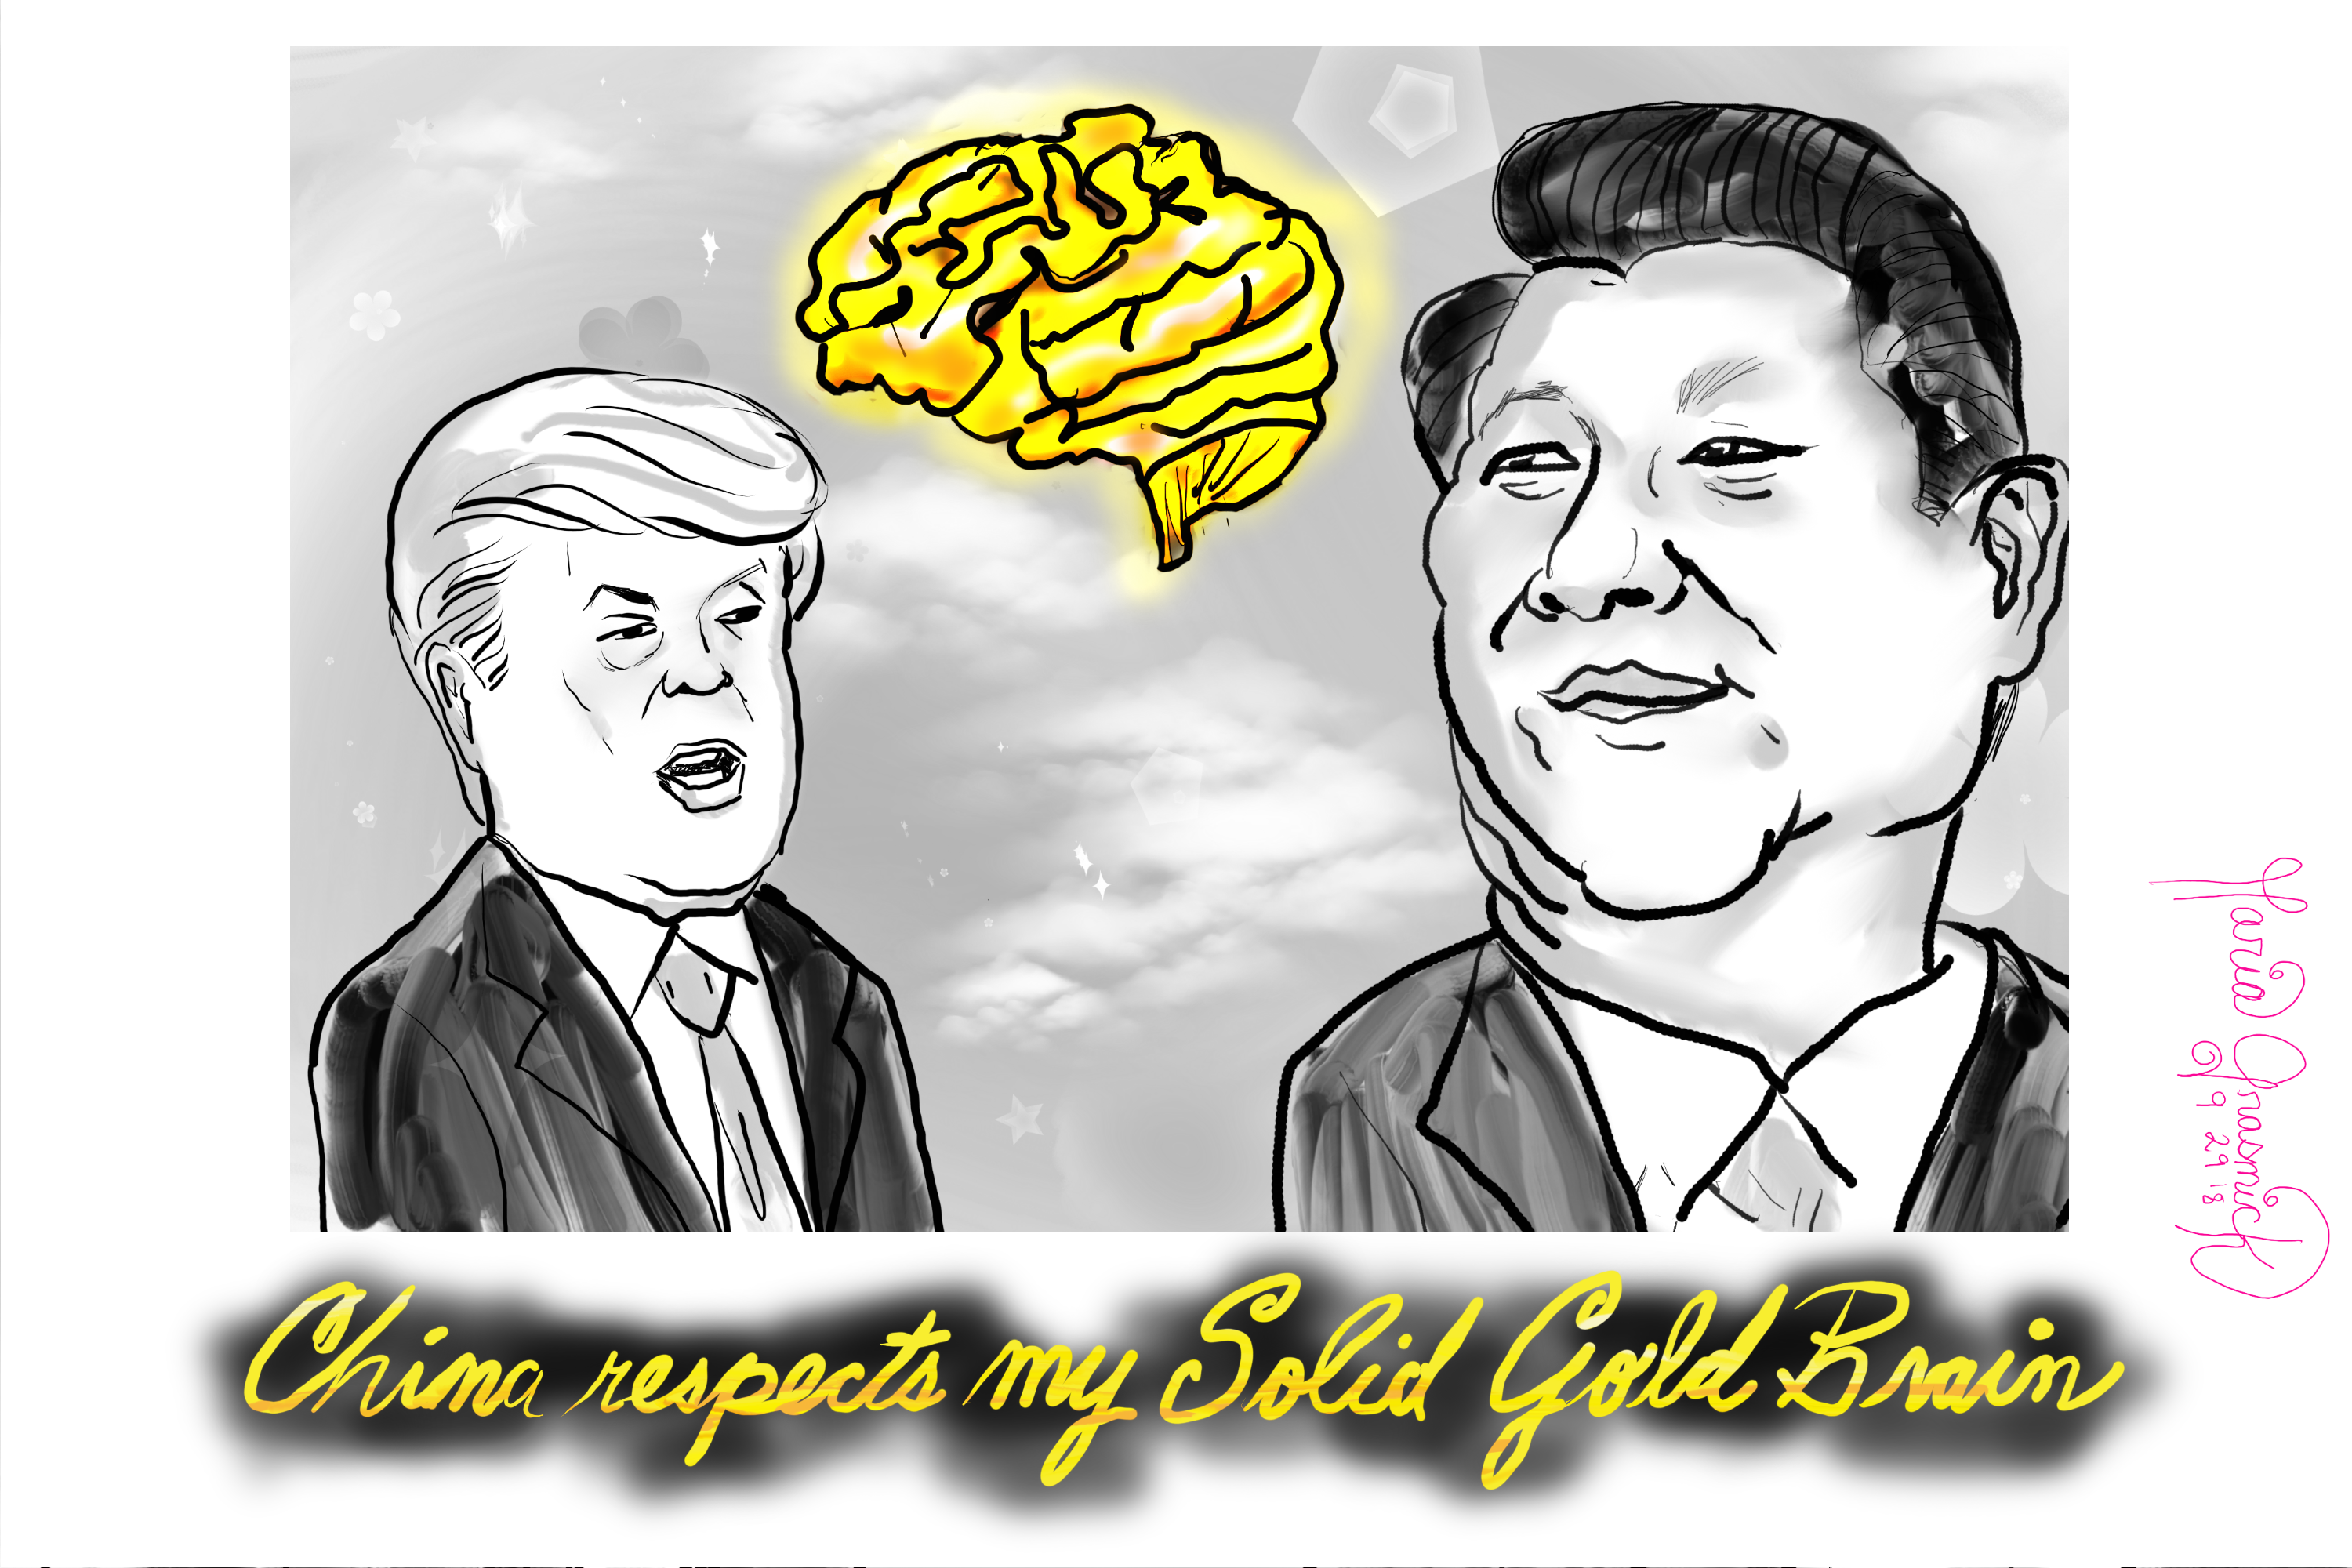 Donald Trump very large brain. President Xi. China. Political Cartoon post thumbnail image